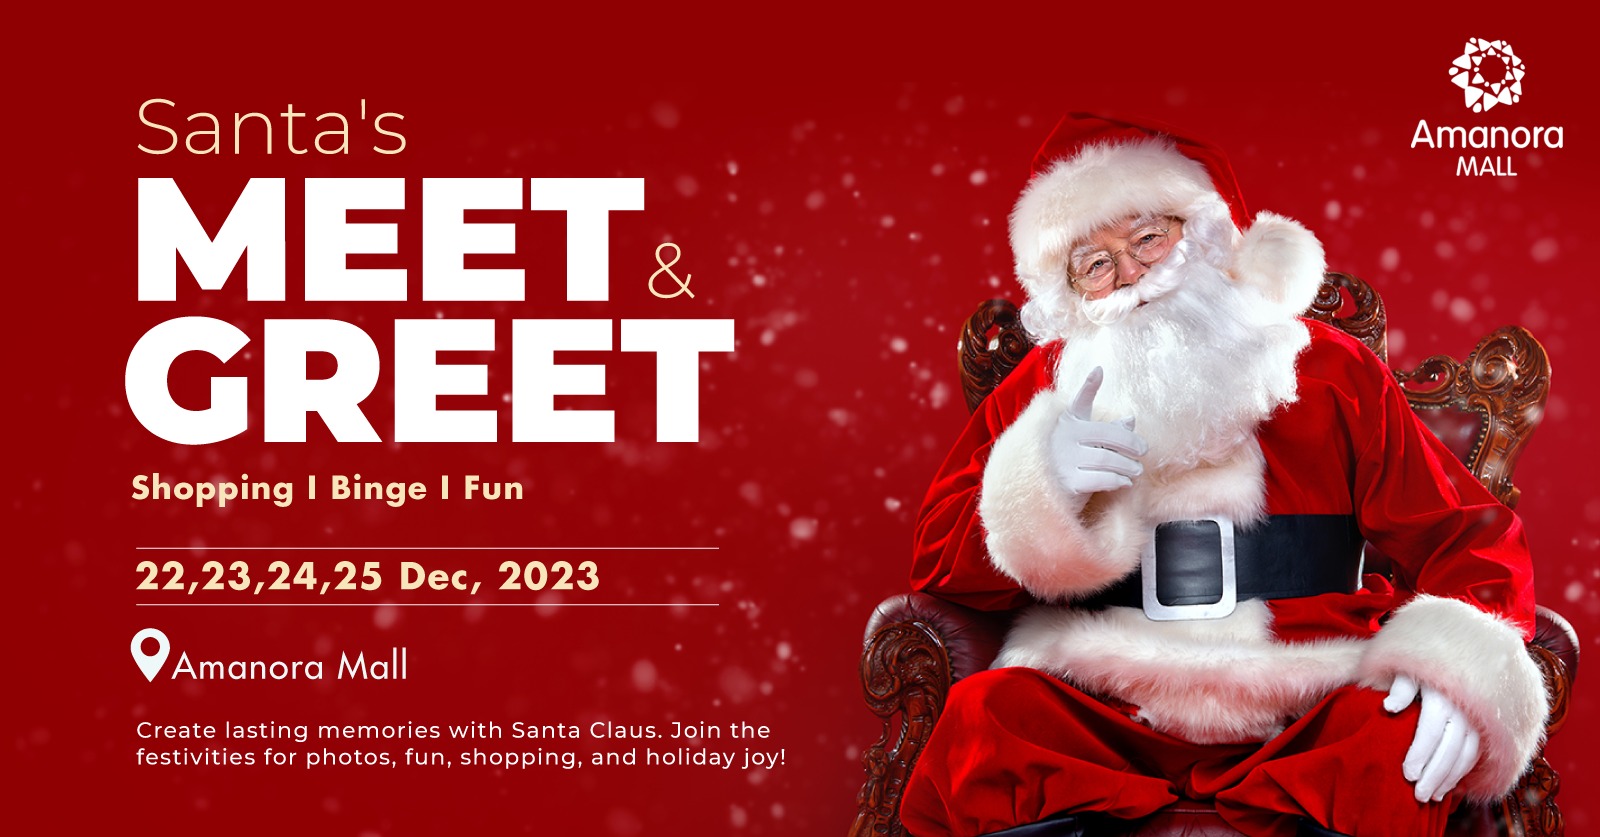 Santa's Meet & Greet